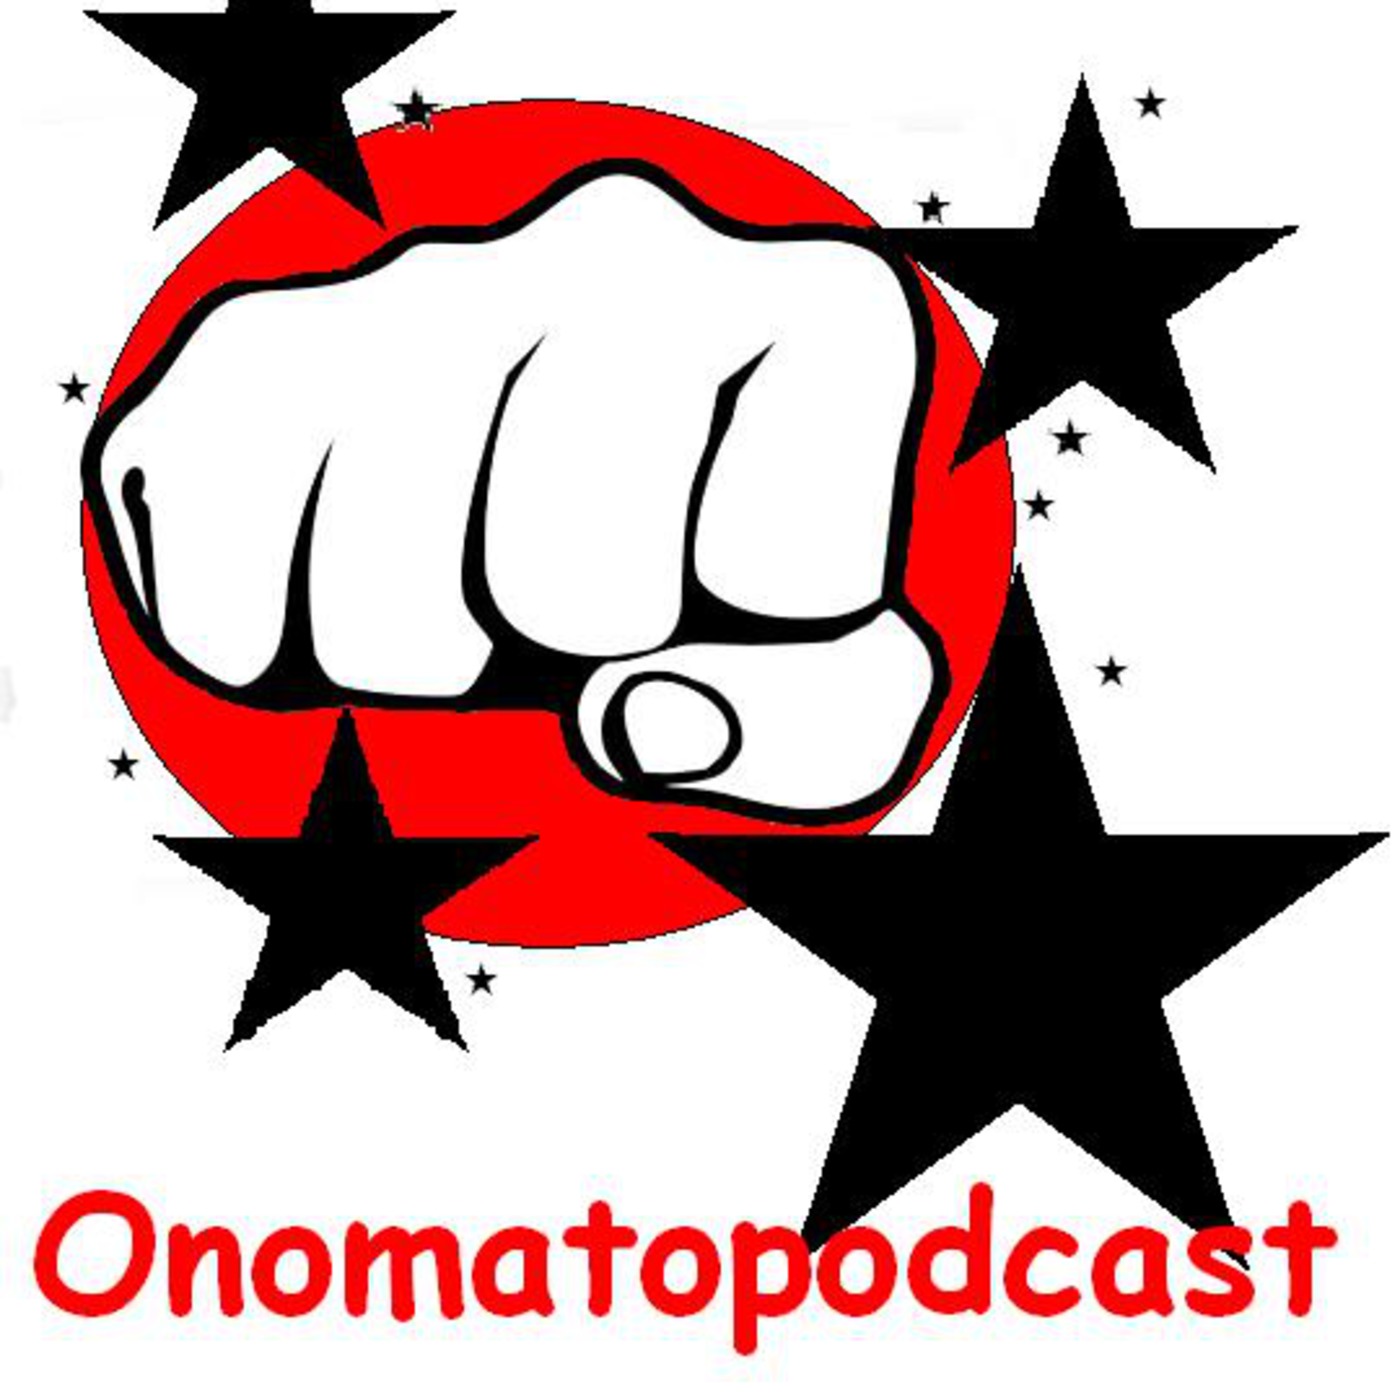 Onomatopodcast